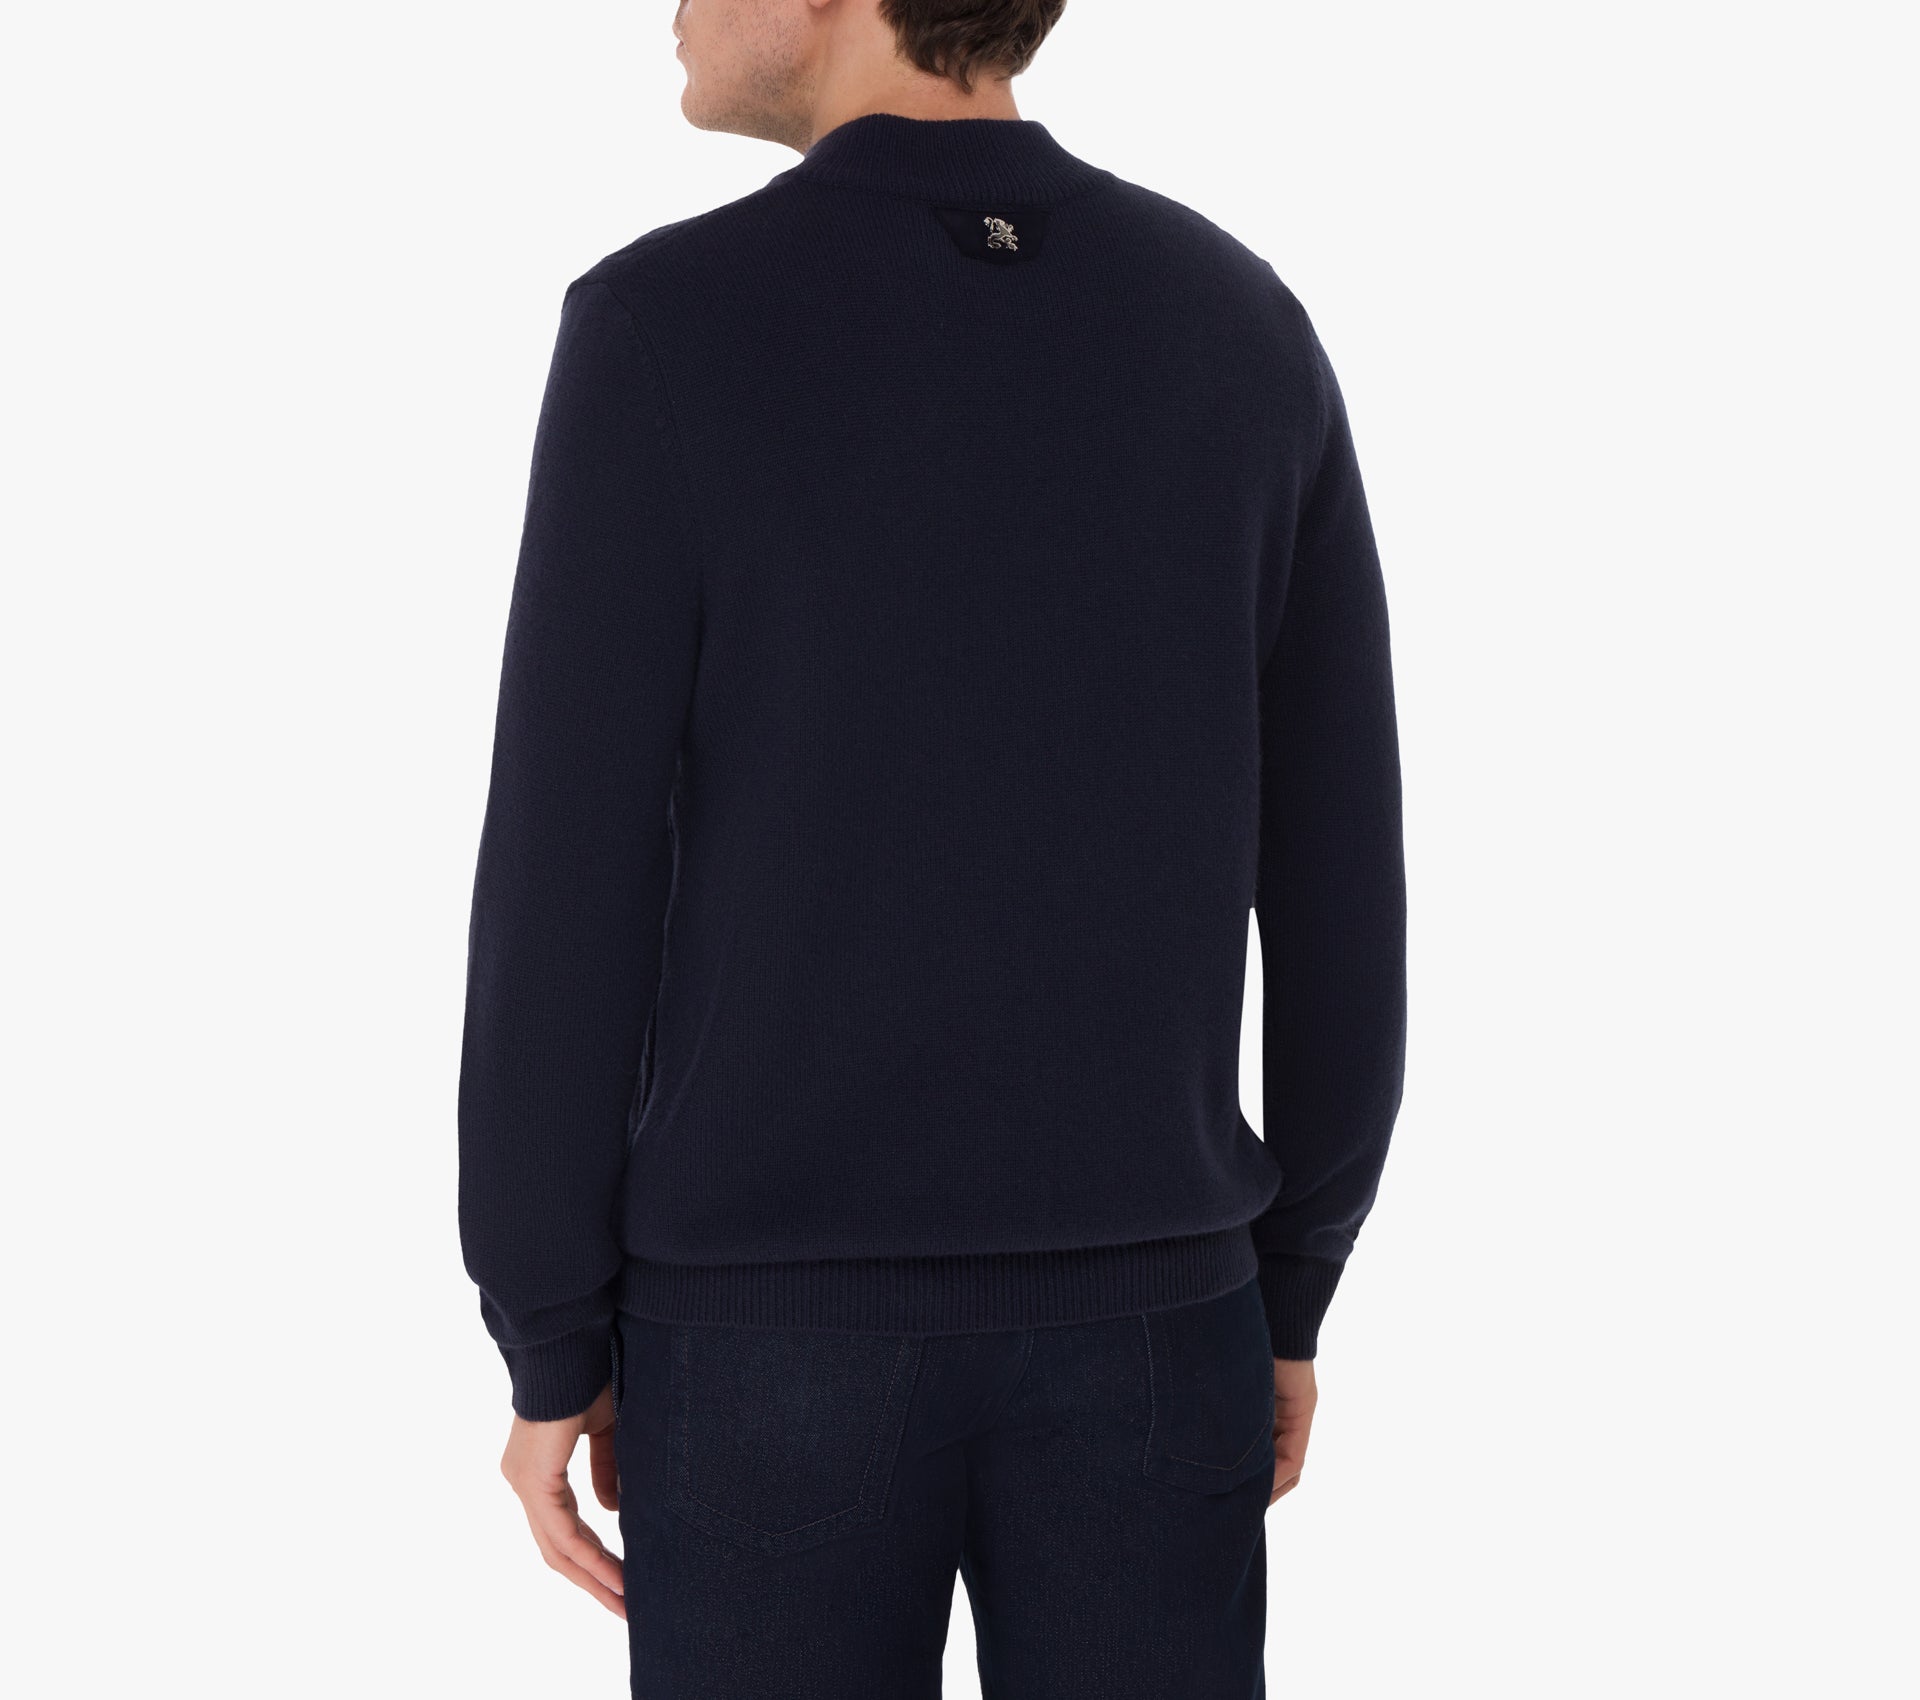 Zipped Mock Neck Sweater with Jacquard Pattern